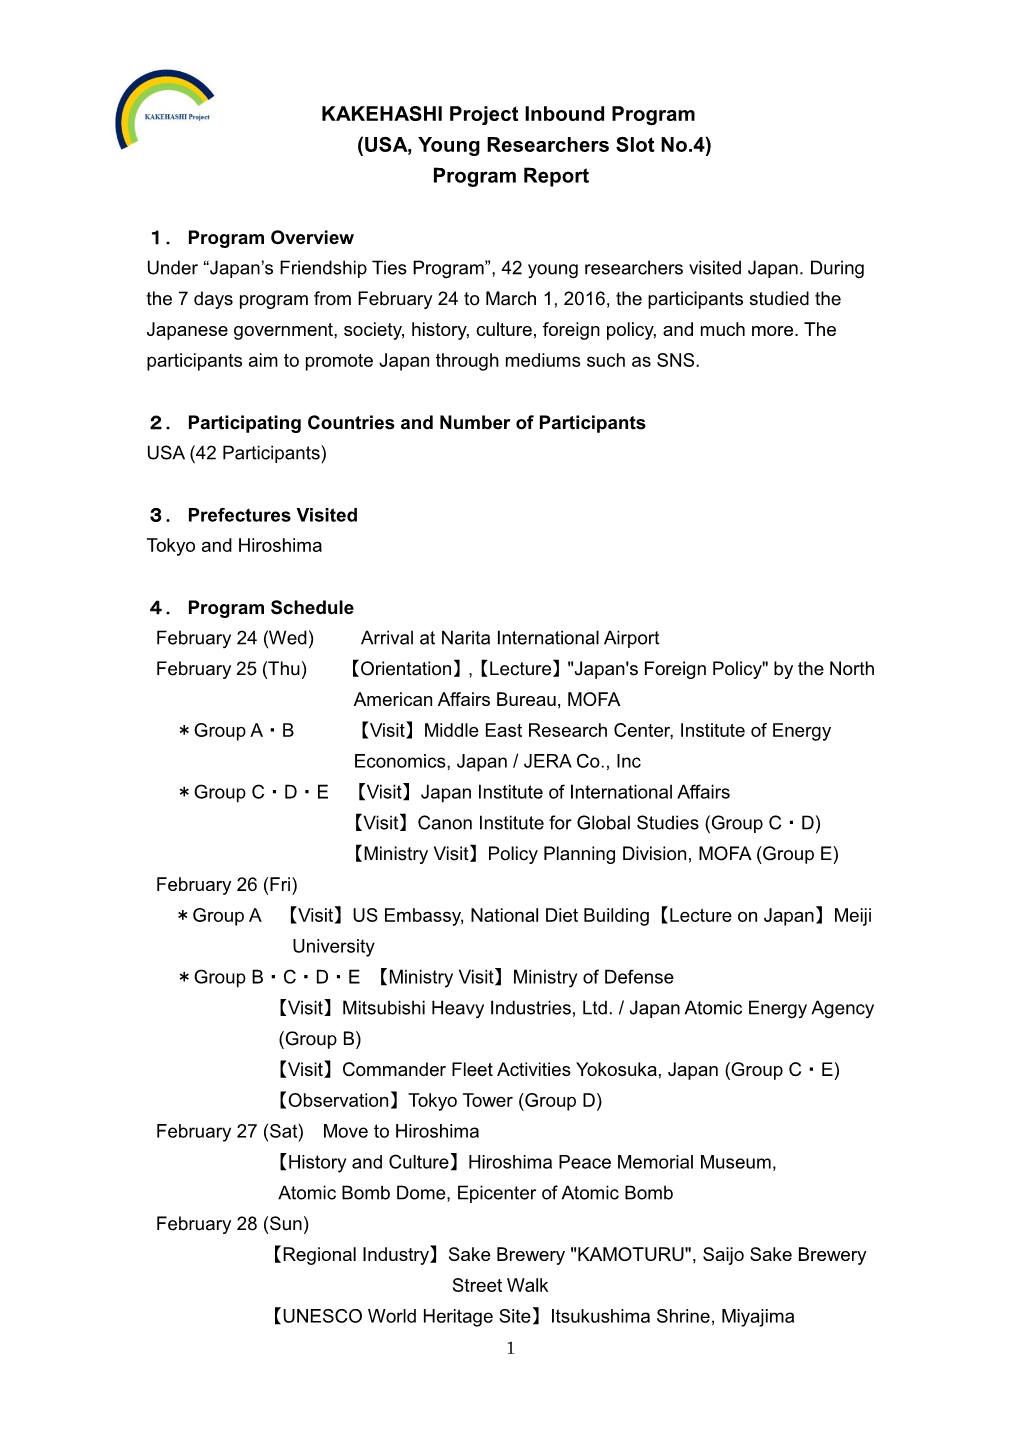 KAKEHASHI Project Inbound Program (USA, Young Researchers Slot No.4) Program Report